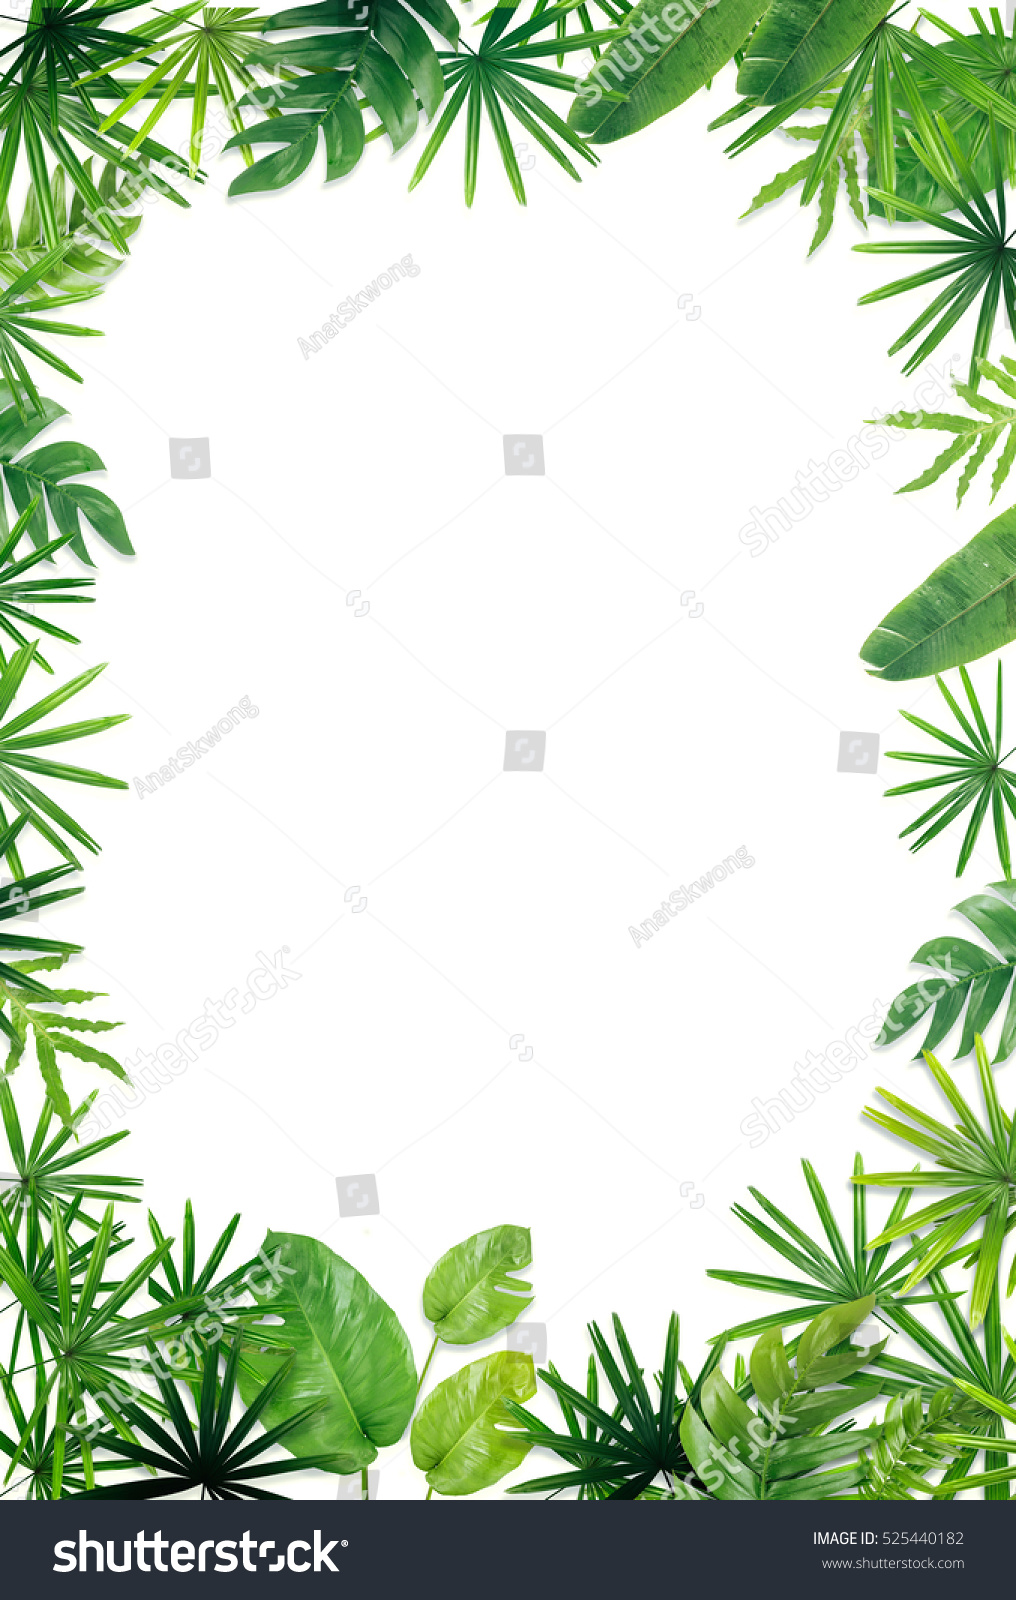 Green Leaf Border Background Stock Photo 525440182 | Shutterstock